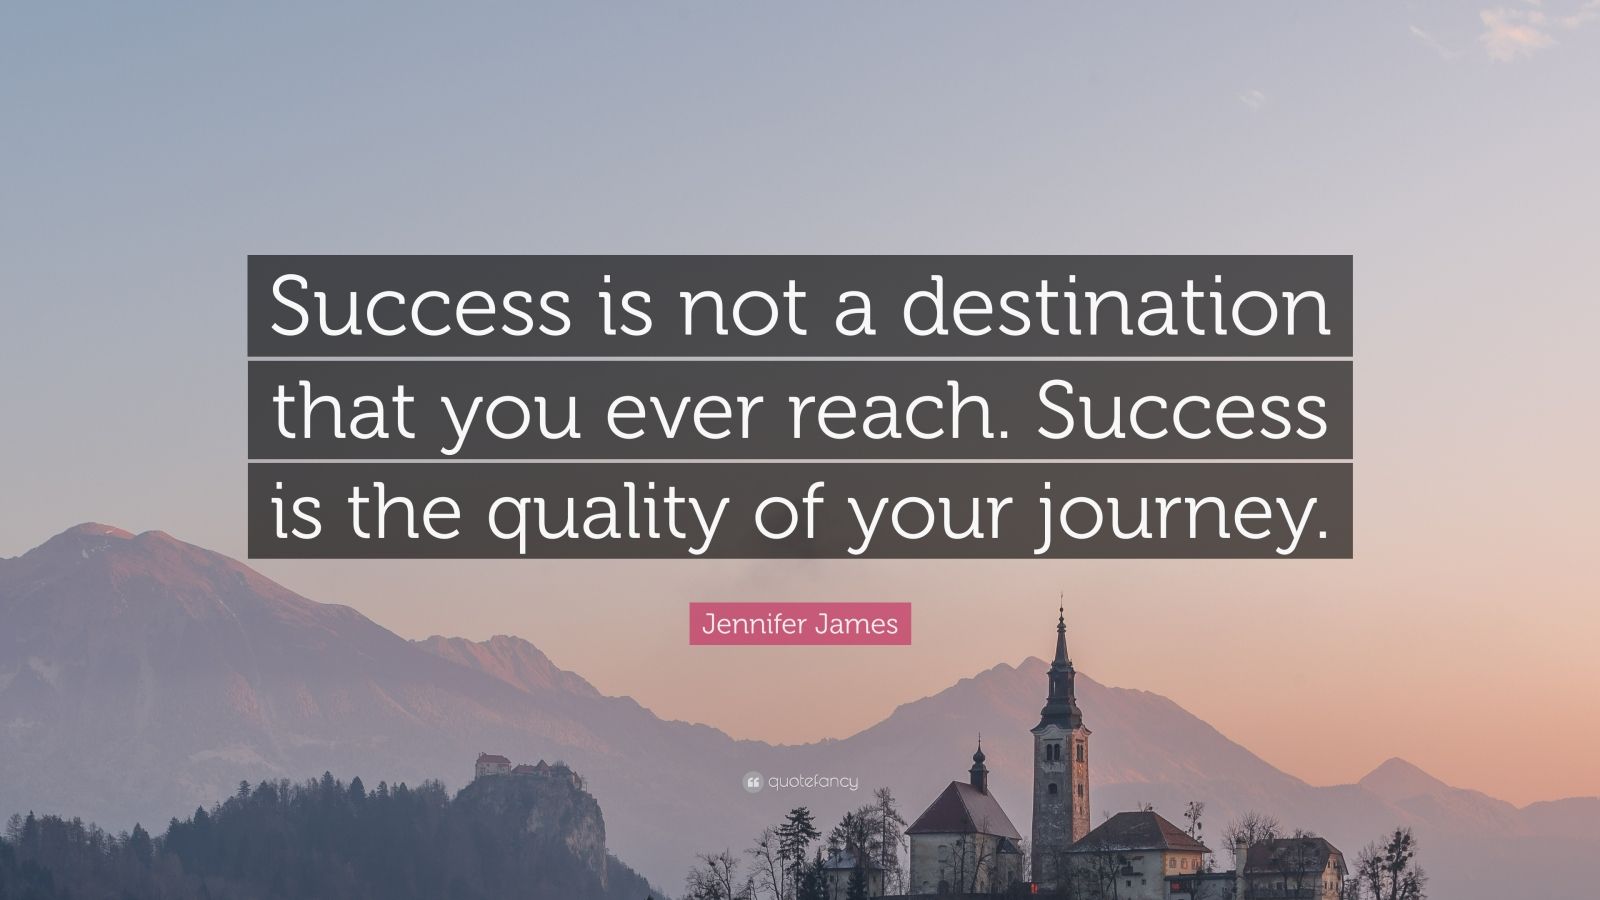 Jennifer James Quote: “Success is not a destination that you ever reach